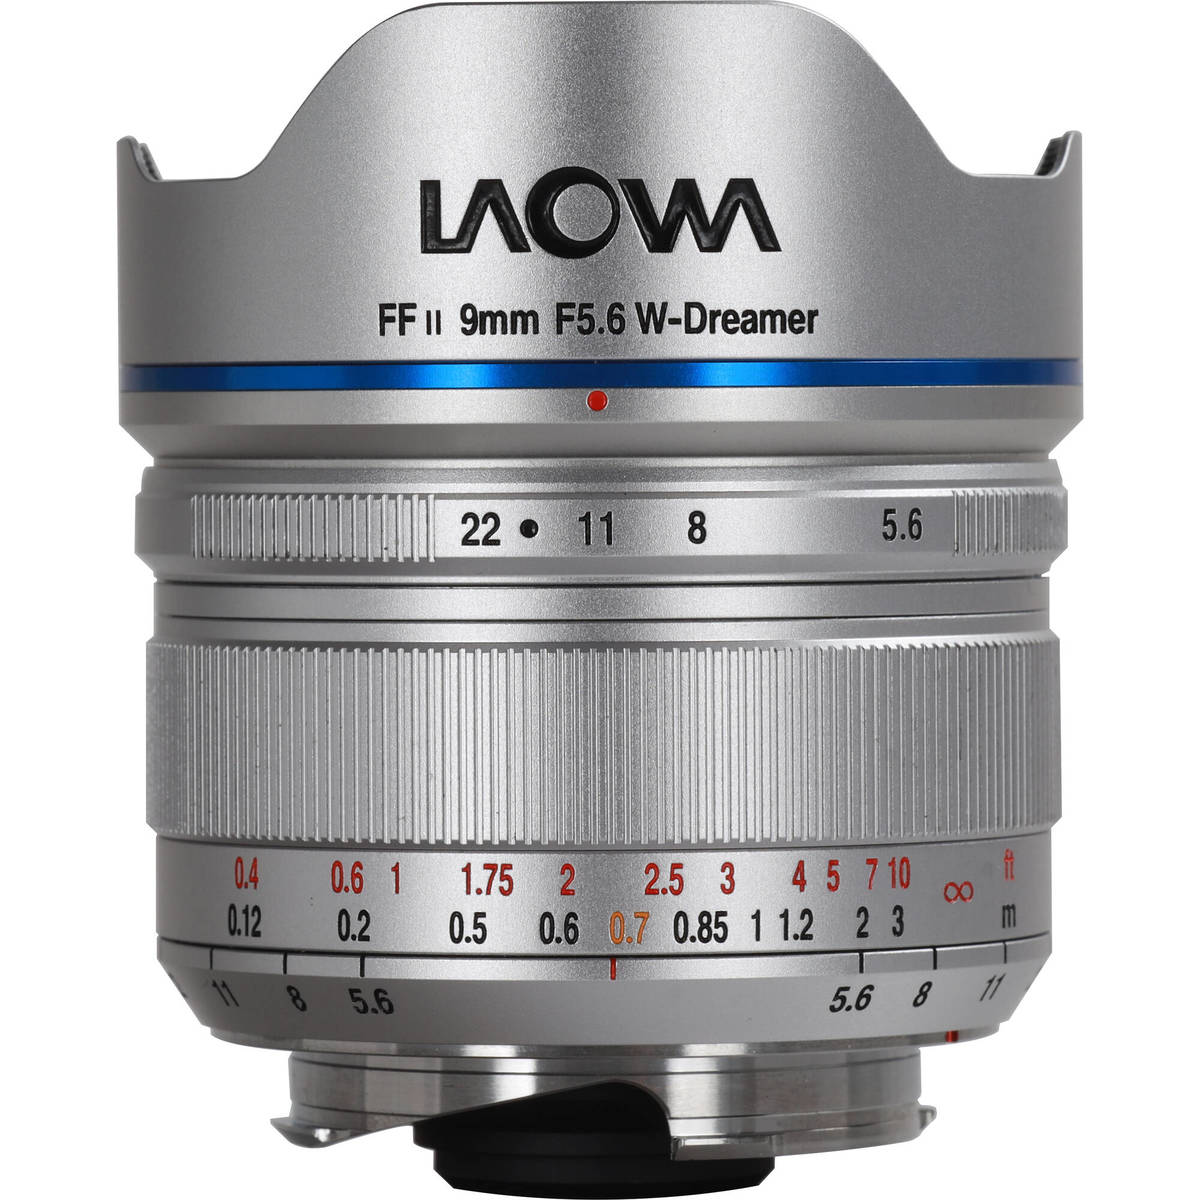 Main Image Laowa Lens 9mm f/5.6 W-Dreamer FF RL (Leica M) Silver